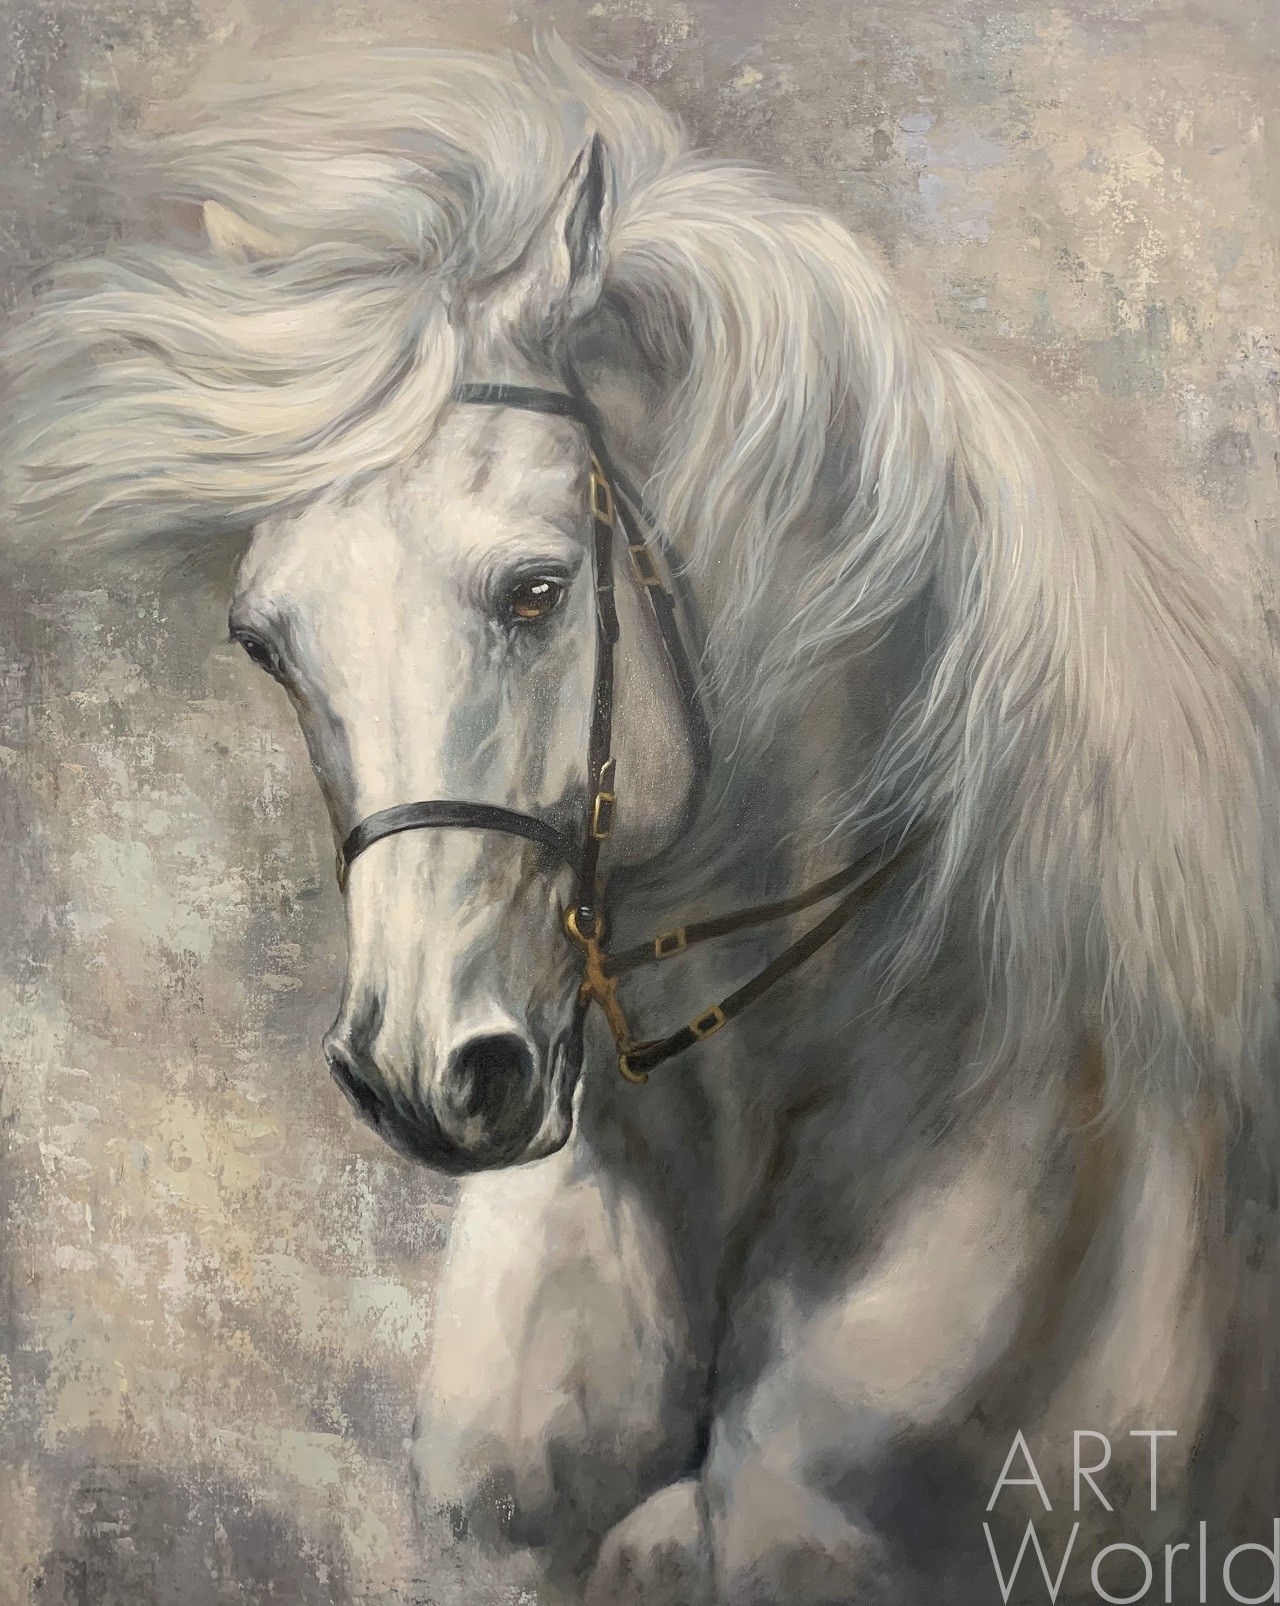 картина масло холст Картина по эскизу заказчика "Белый конь", Камский Савелий, LegacyArt Артворлд.ру